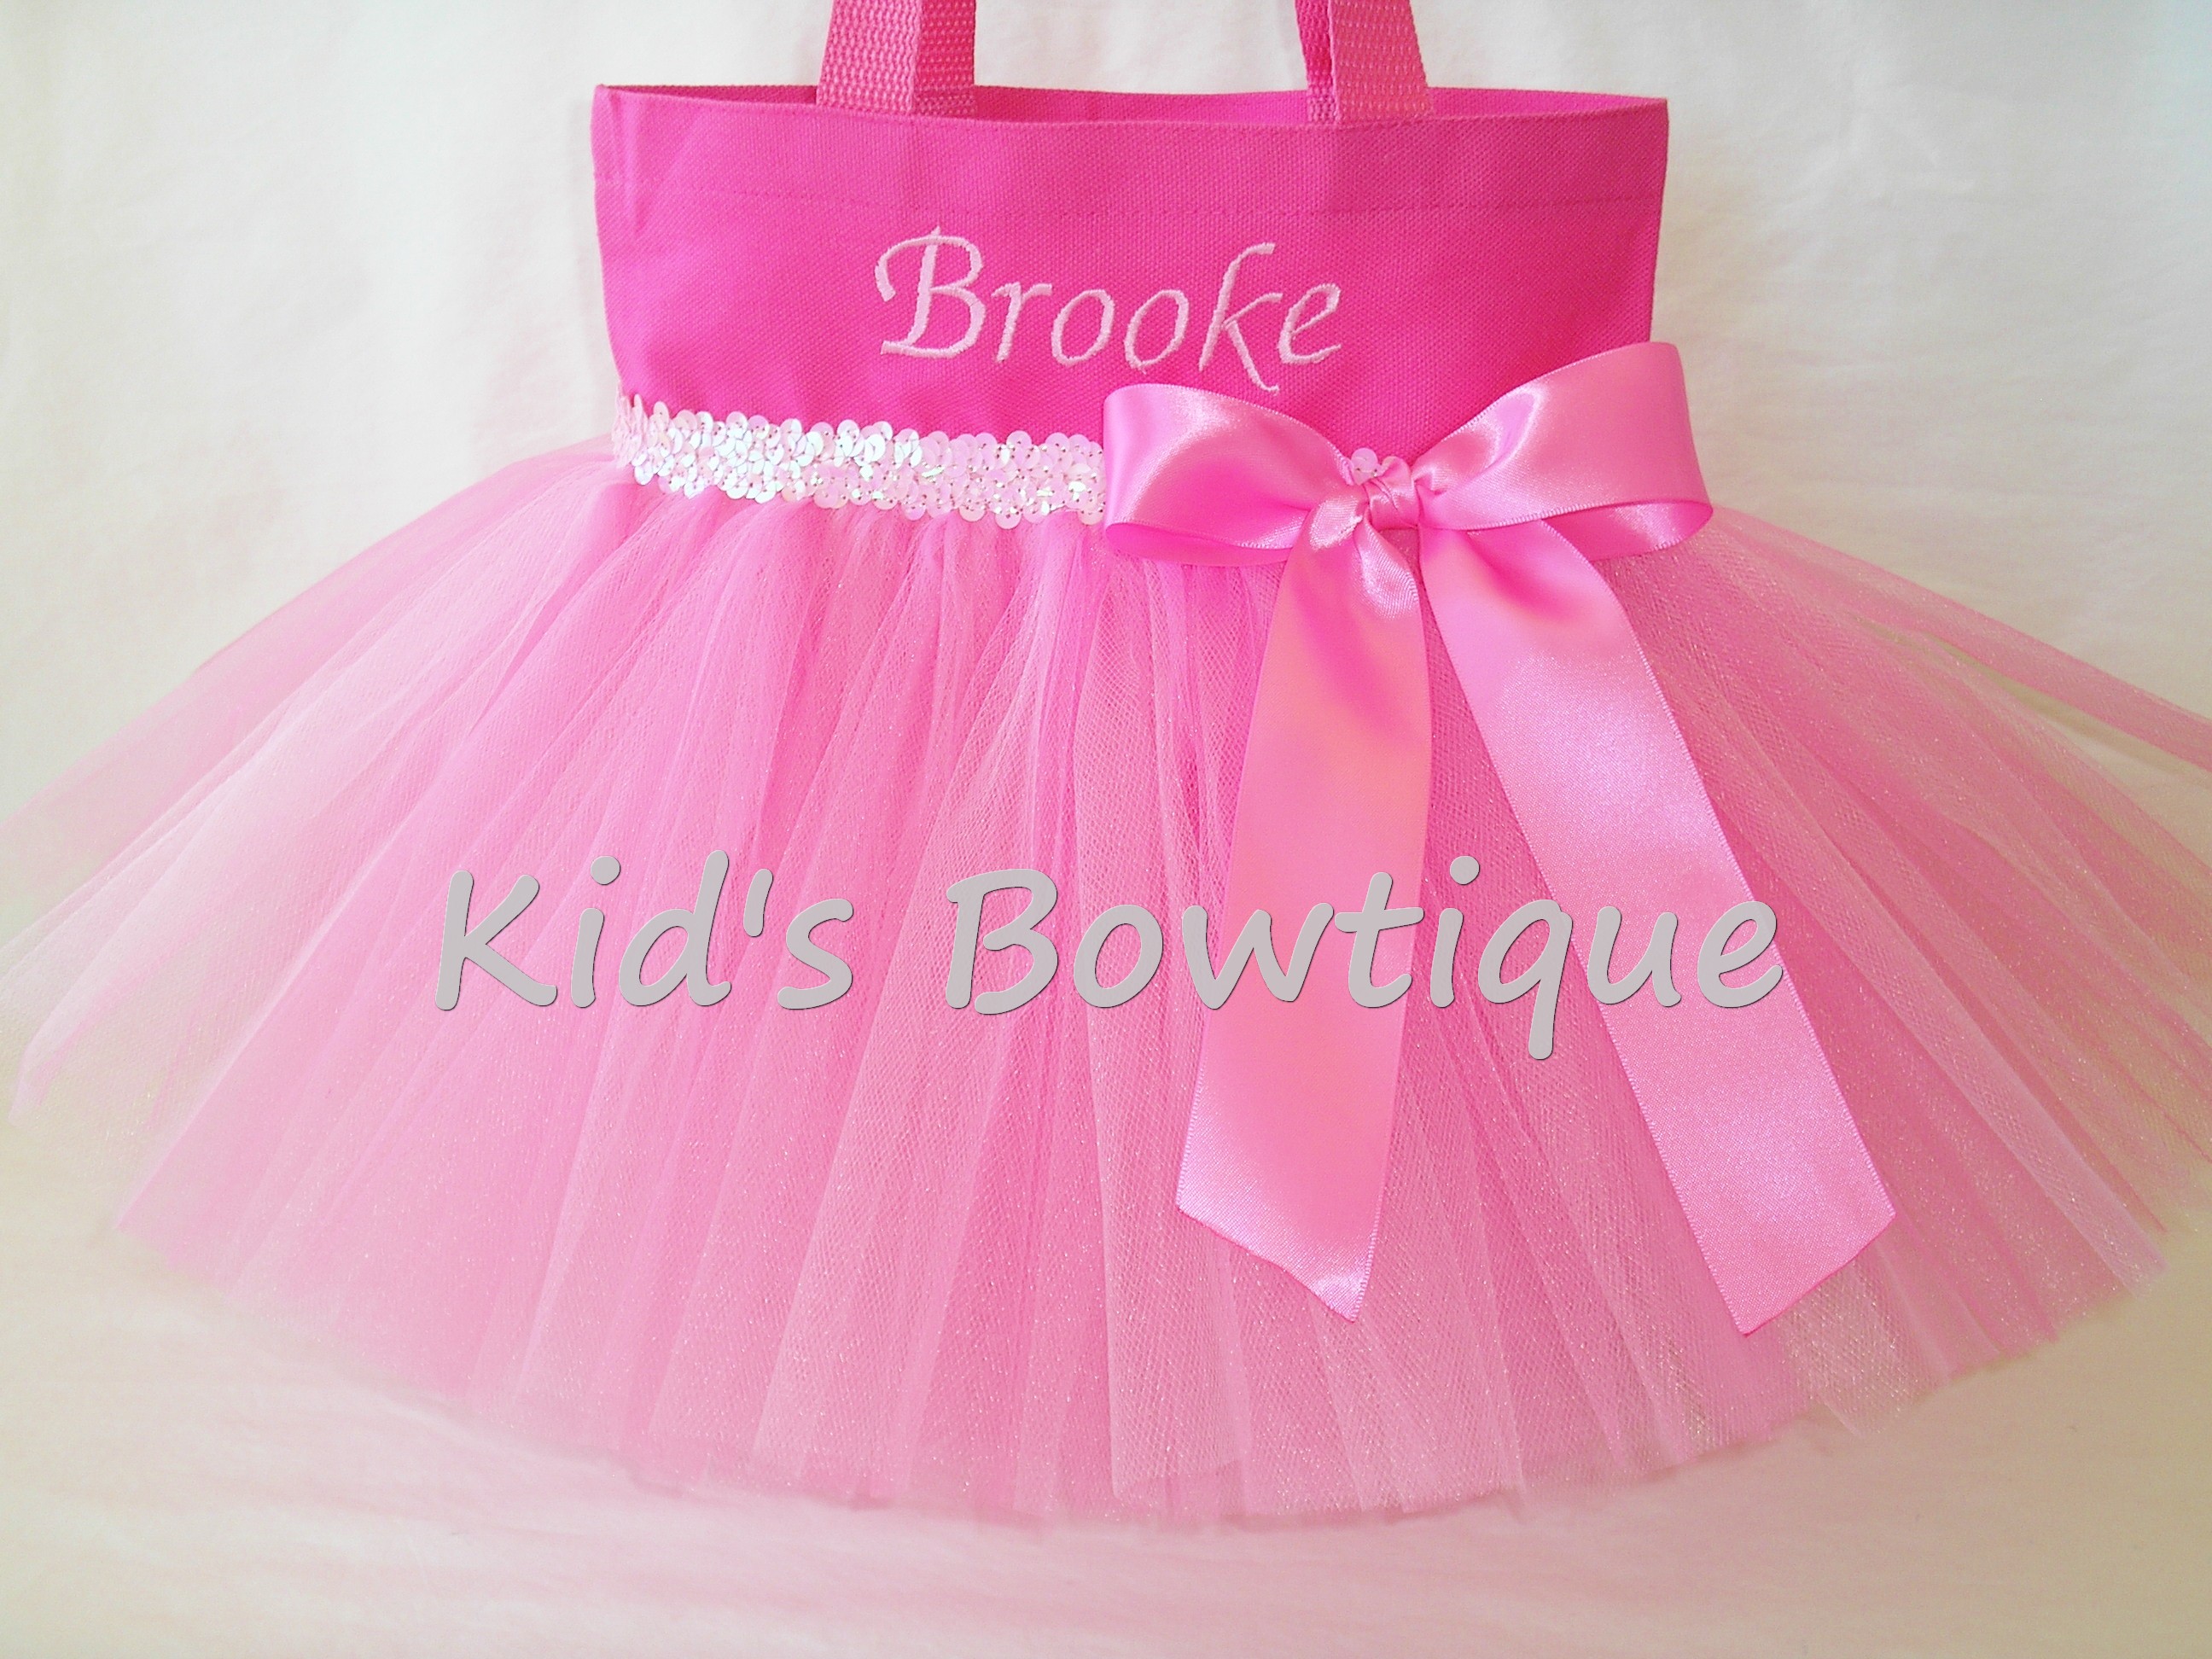 Monogrammed Tutu Tote Bag - Item ttb16 Princess Pink Dance Tutu Bag with Sequins and Bow